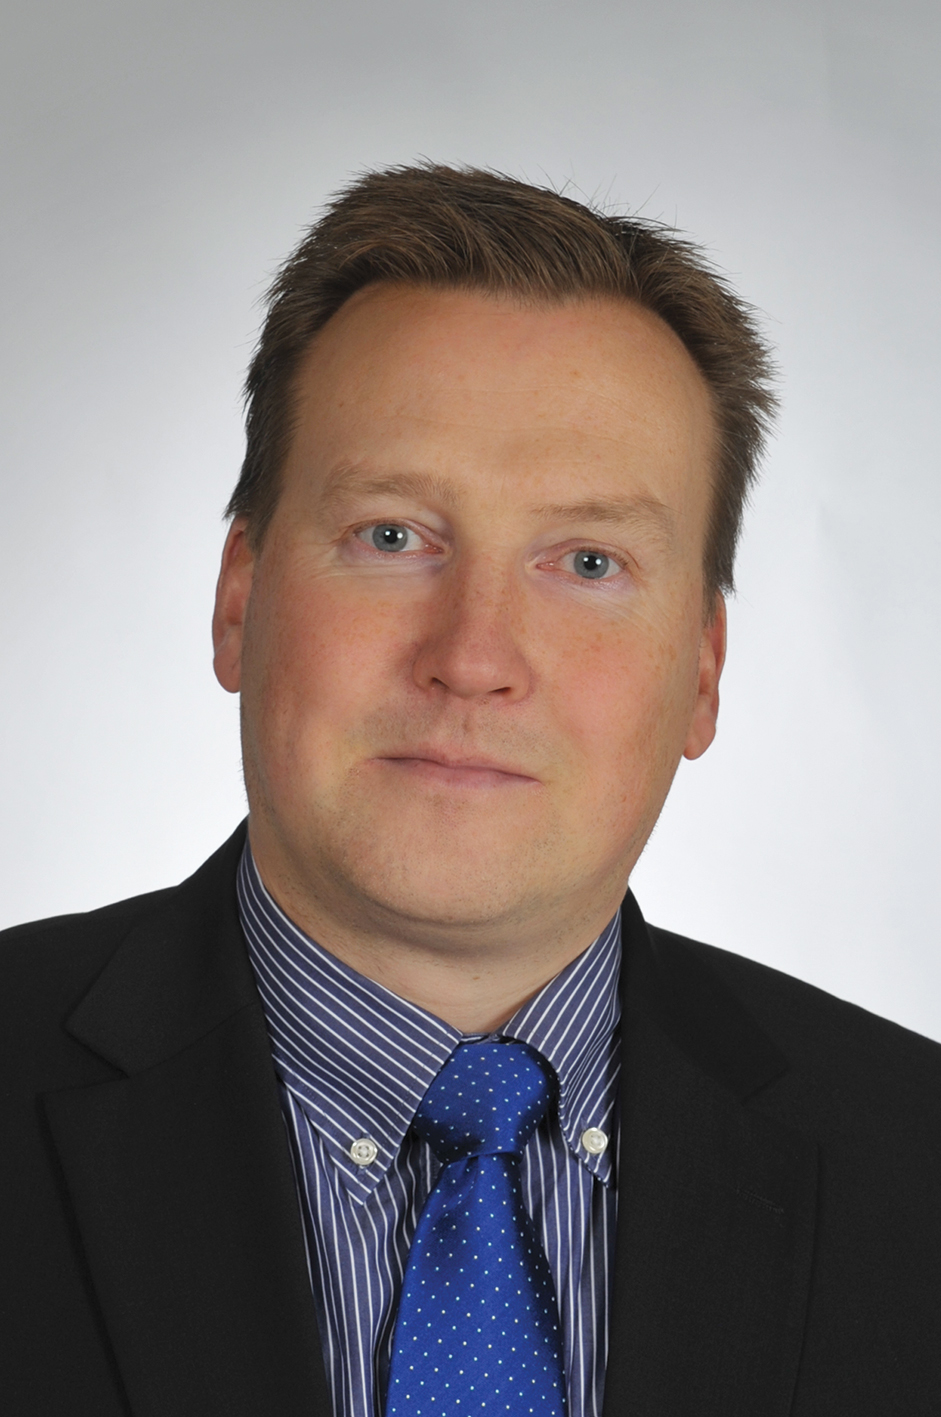 Jarkko Multanen, CEO, Accanto Systems